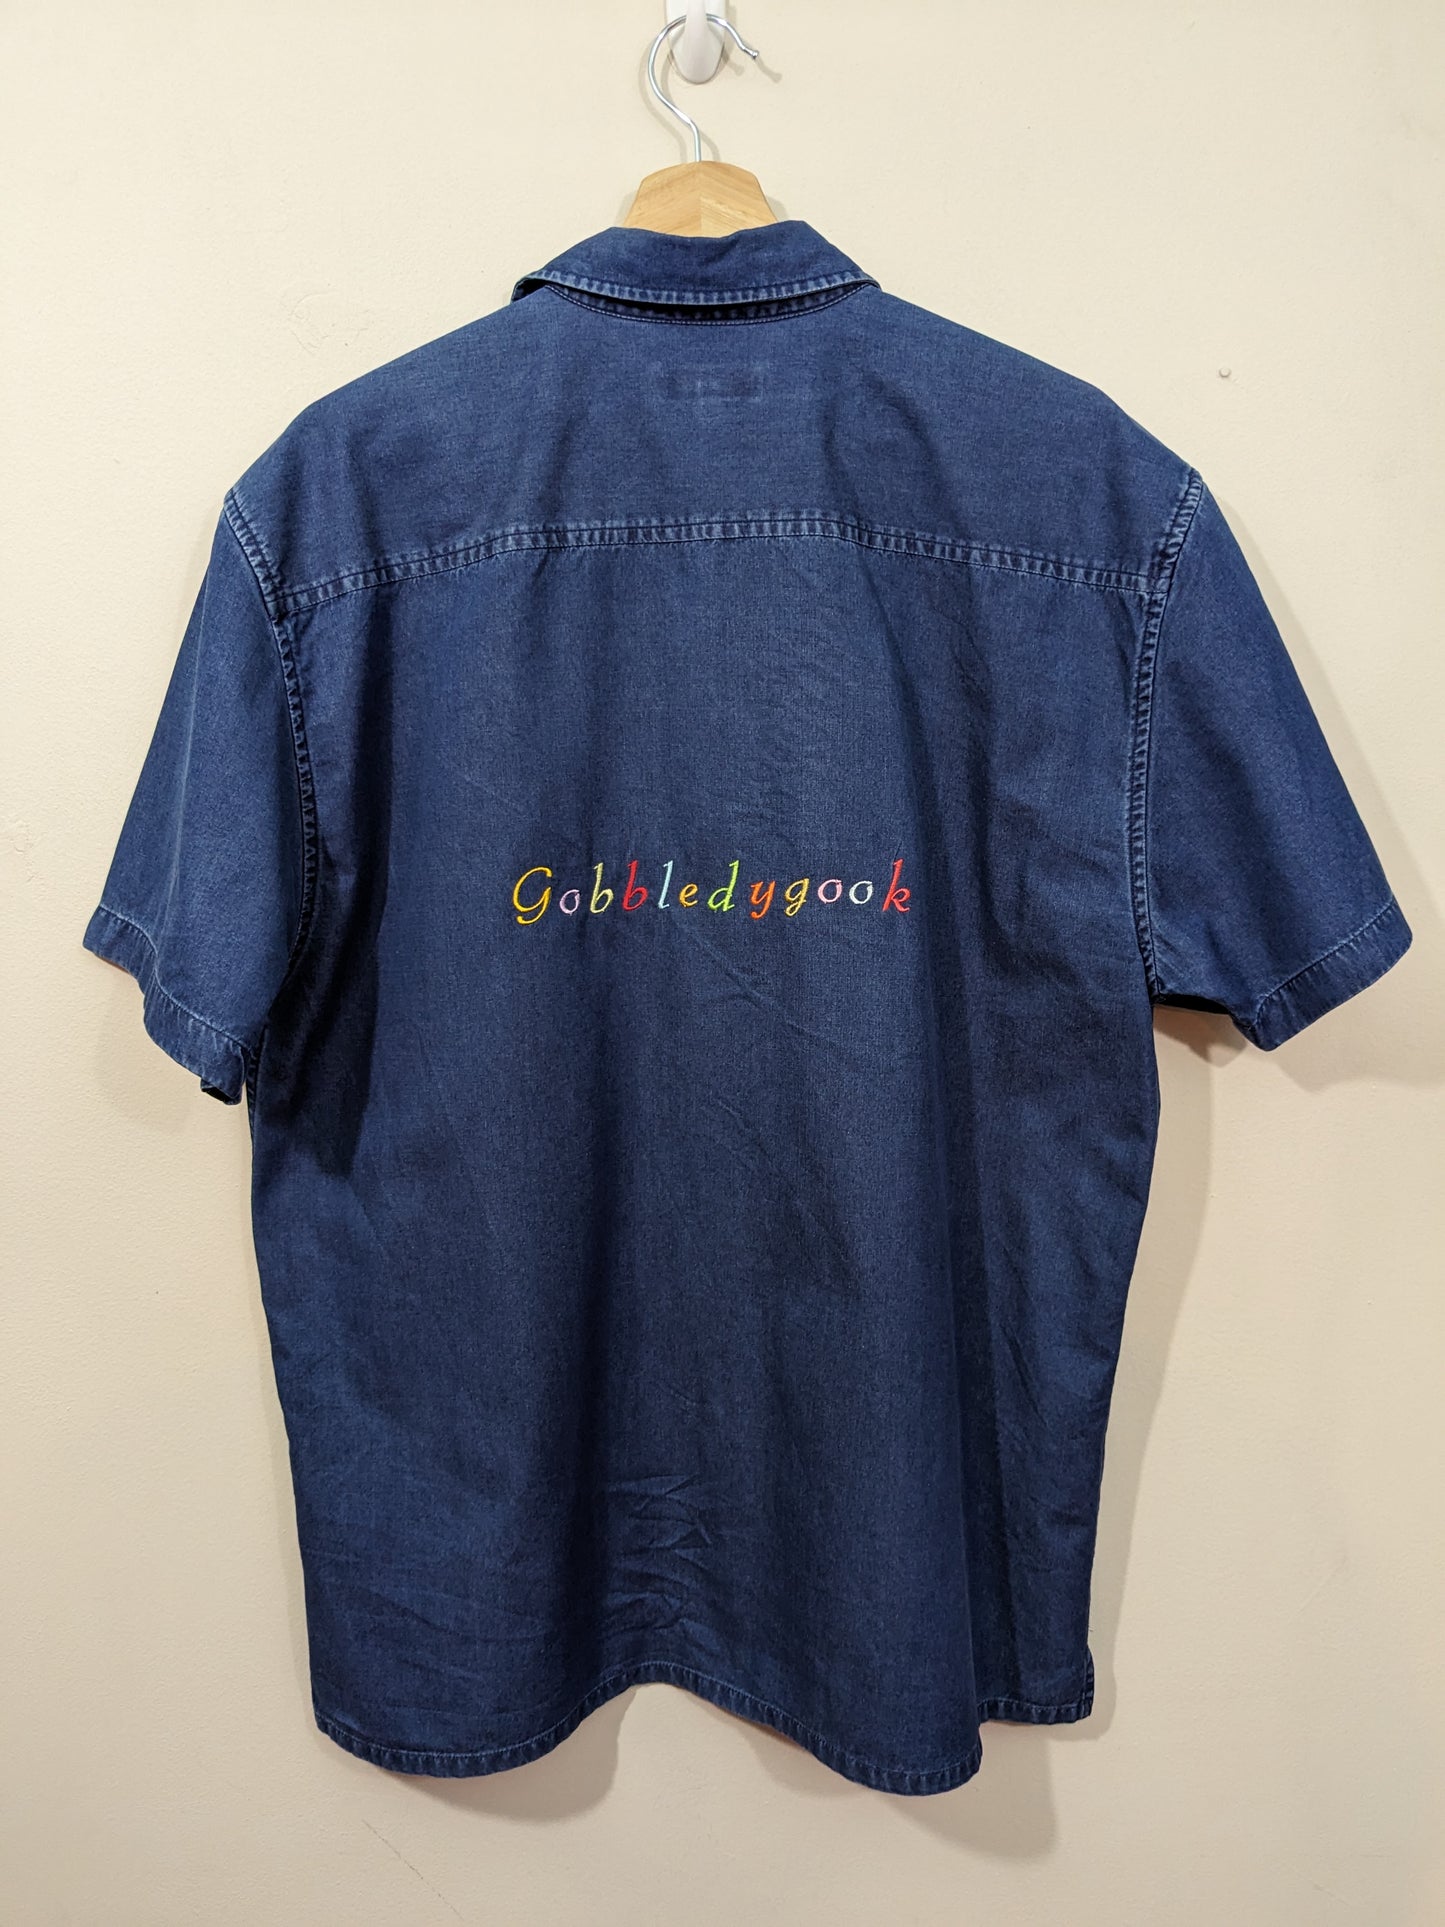 Large Deep Blue Reworked/ Embroidered Denim Short Sleeve Shirt - Rainbow Gobbledygook Design